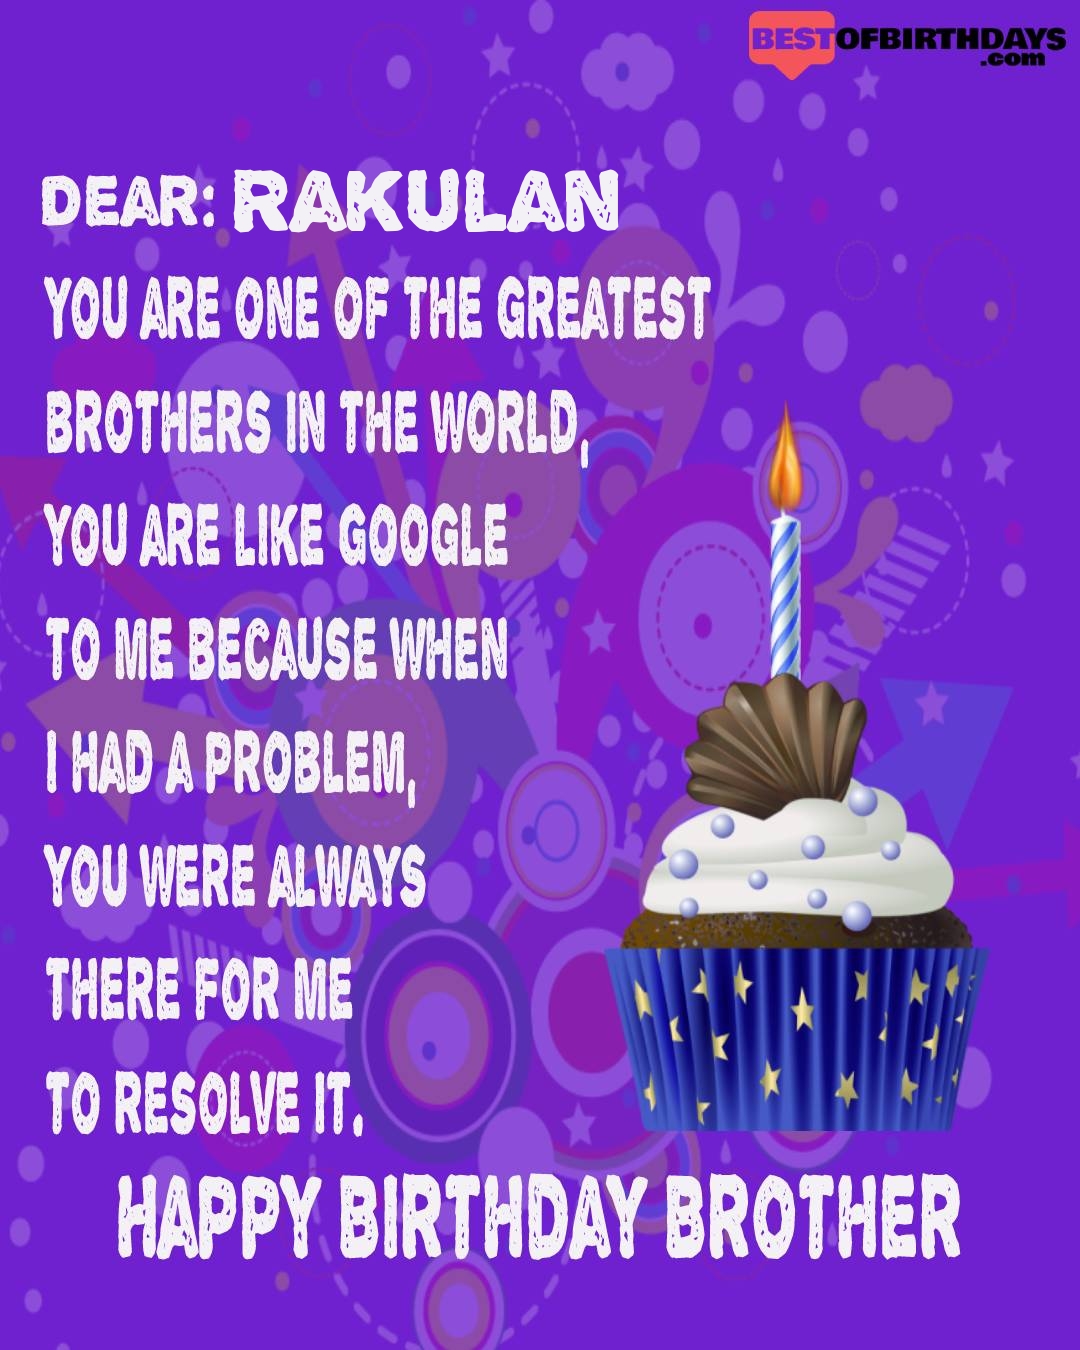 Happy birthday rakulan bhai brother bro